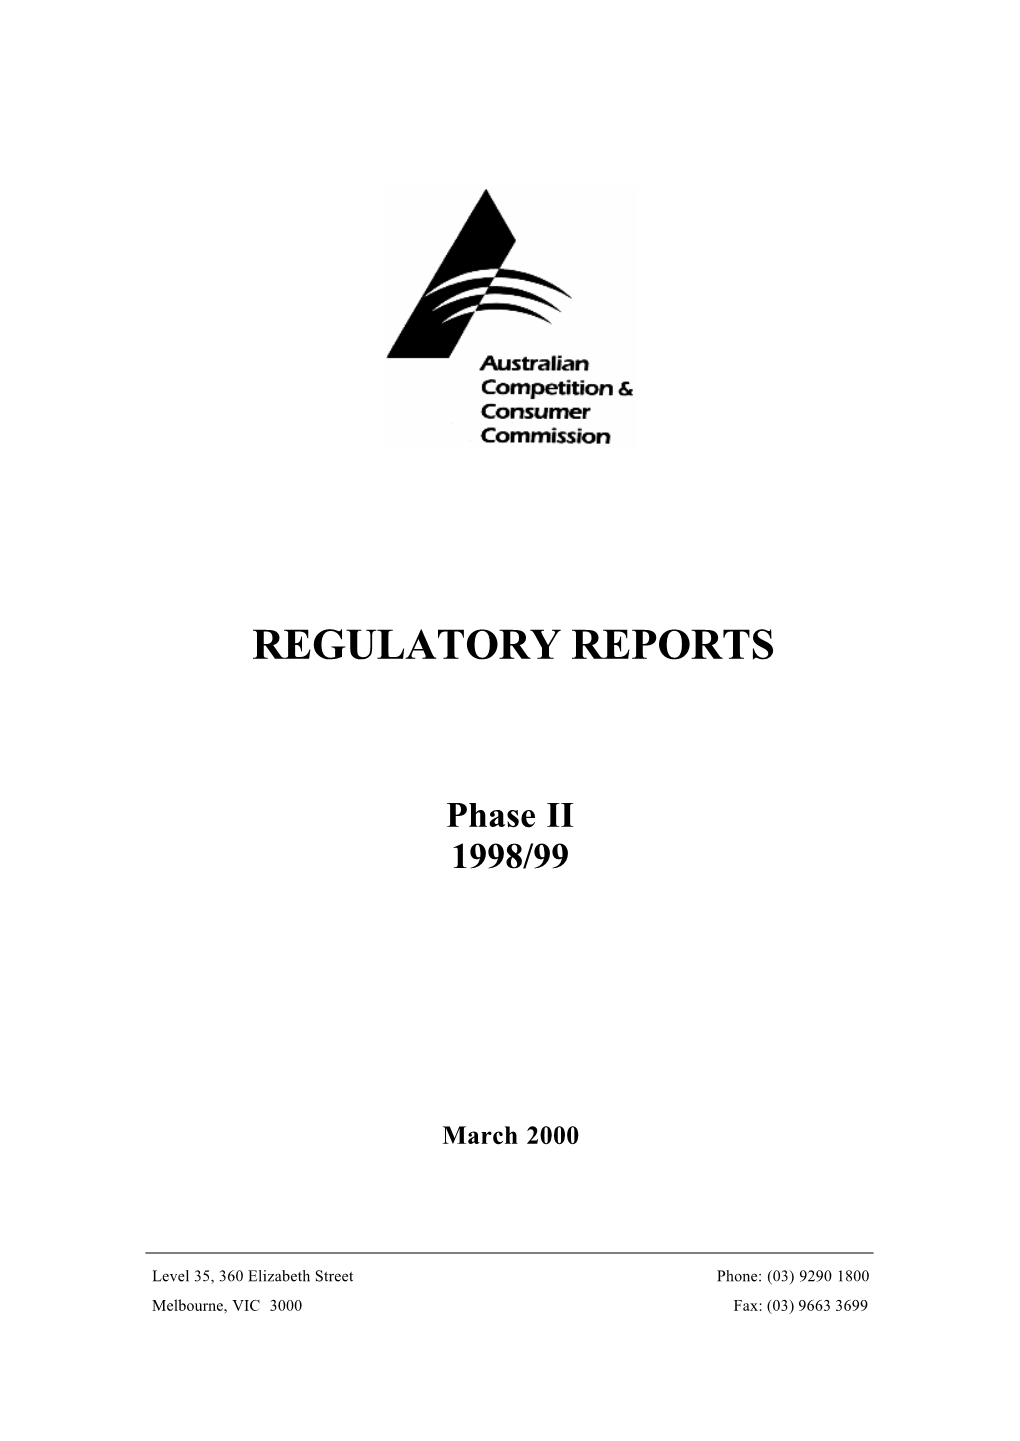 1998-99 Regulatory Reports